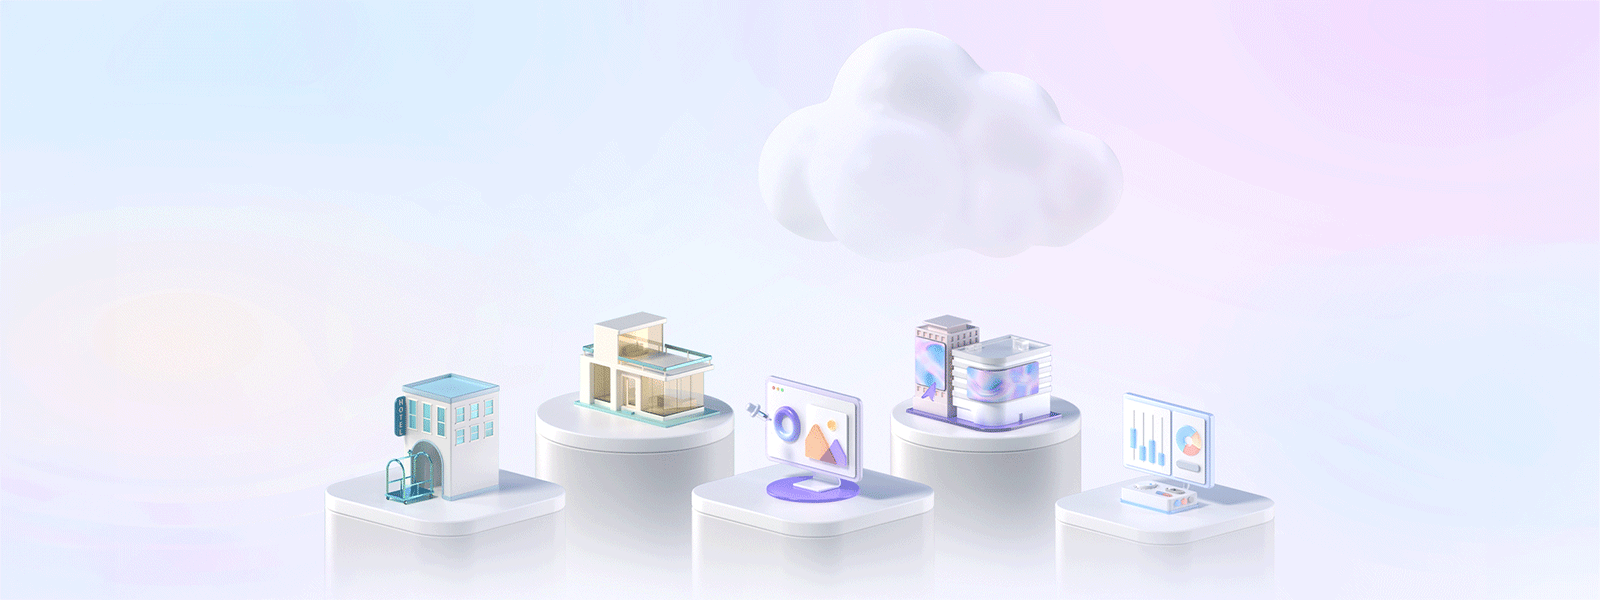 LG Business Cloud